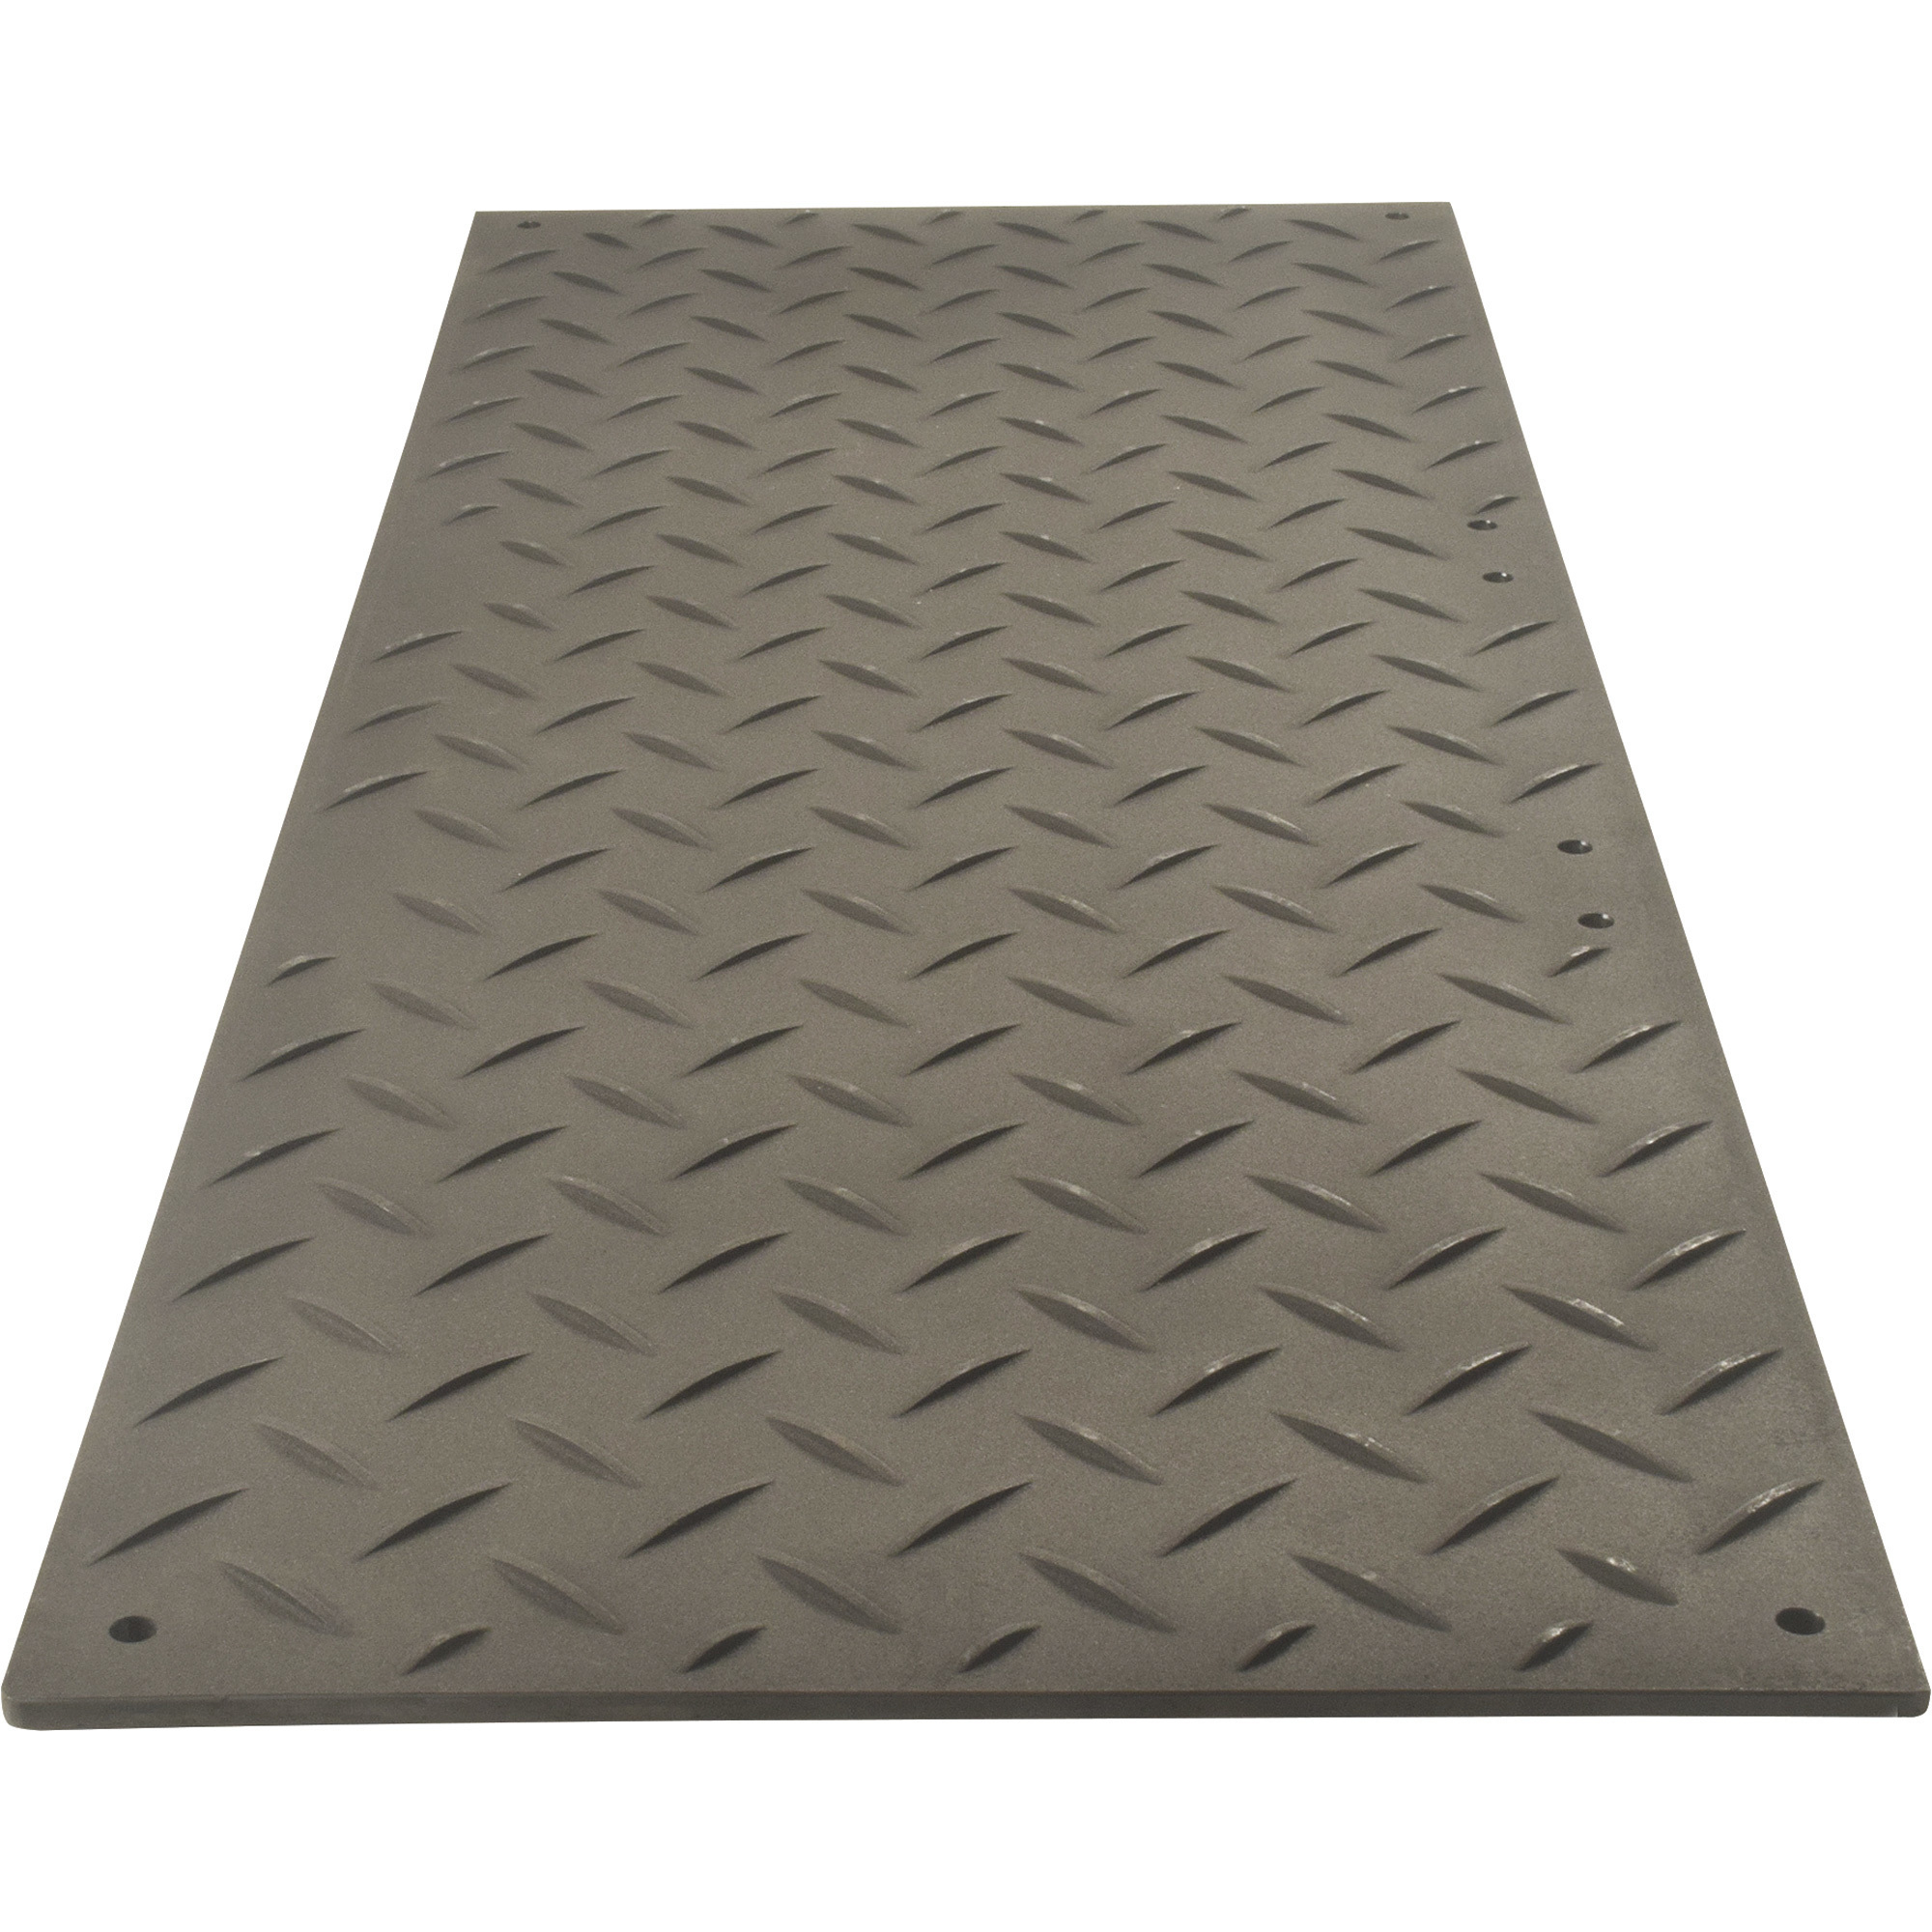 Checkers AlturnaMat Ground Protection Mat â Black, 3ft.W x 8ft.L, Diamond Plate Tread Design, Model AM38